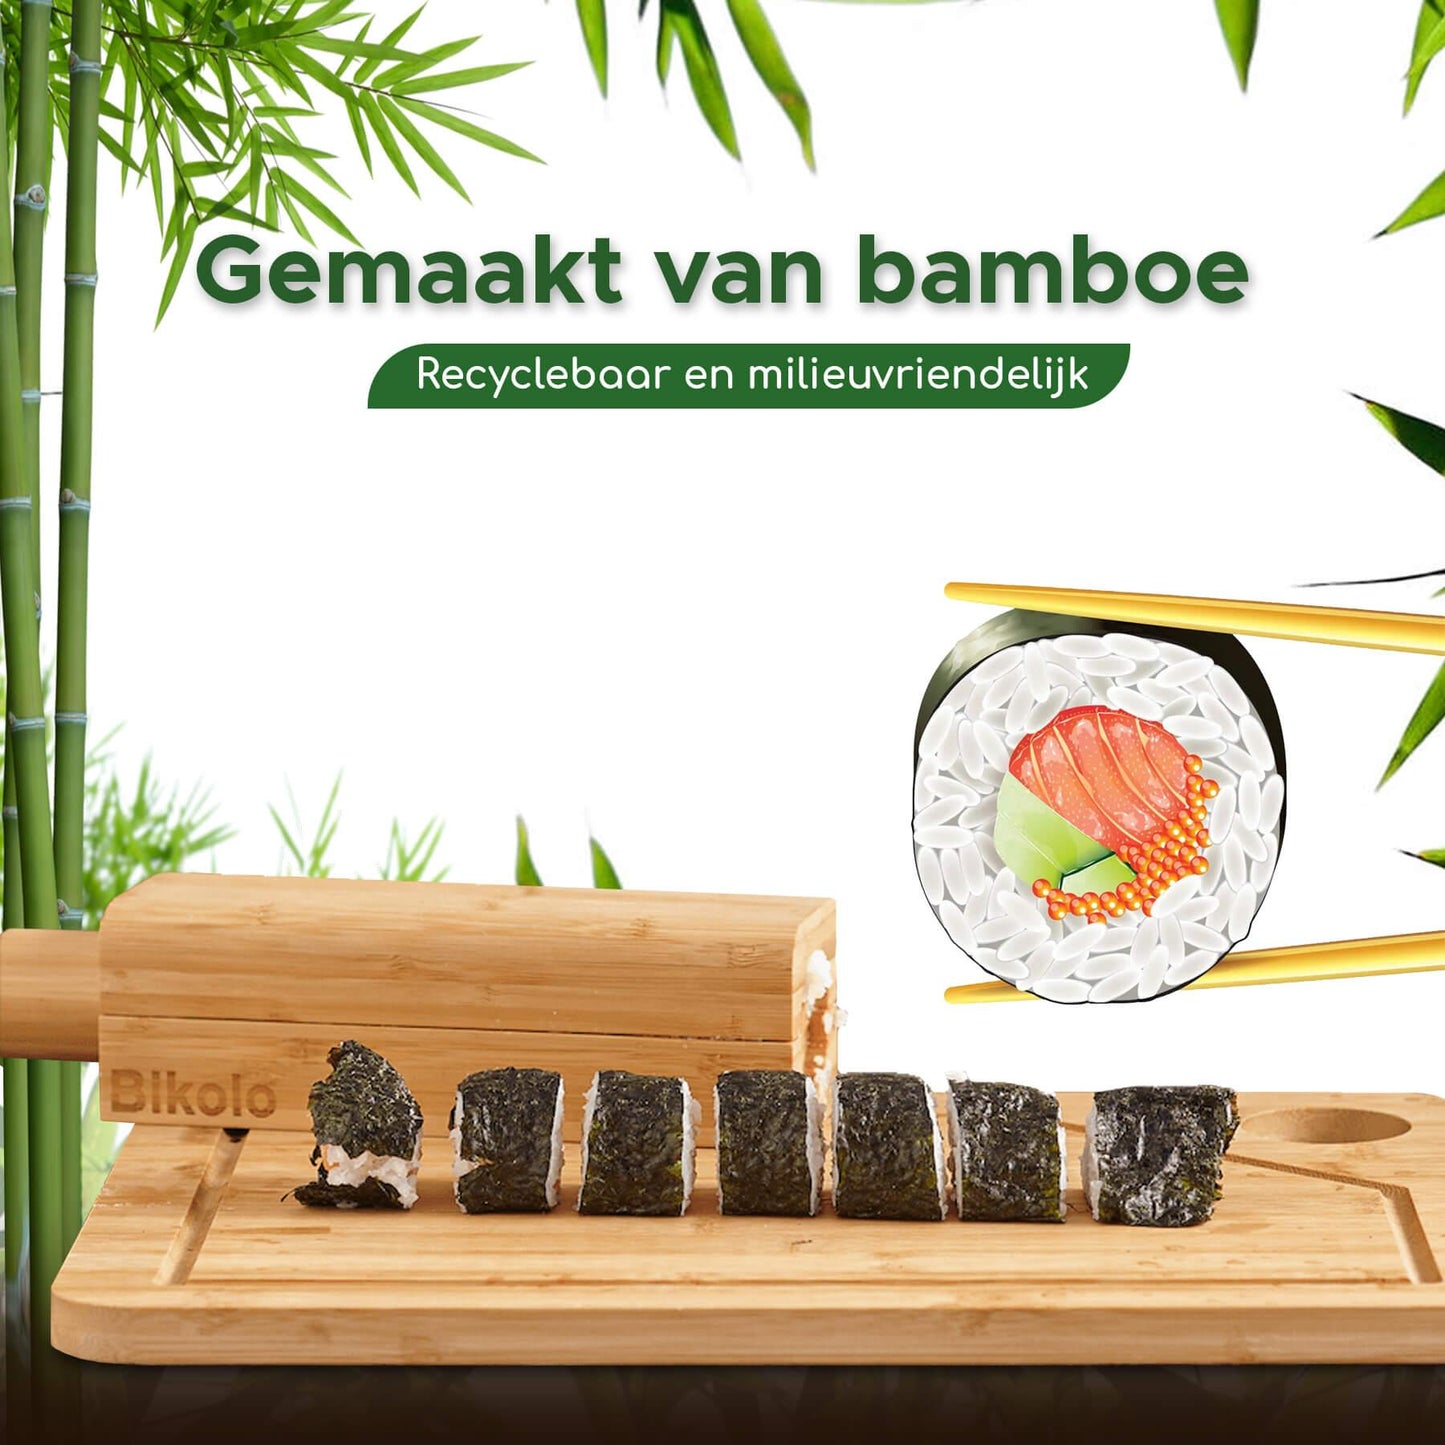 MikaMax- Sushi Maker- Bamboo Maki Master